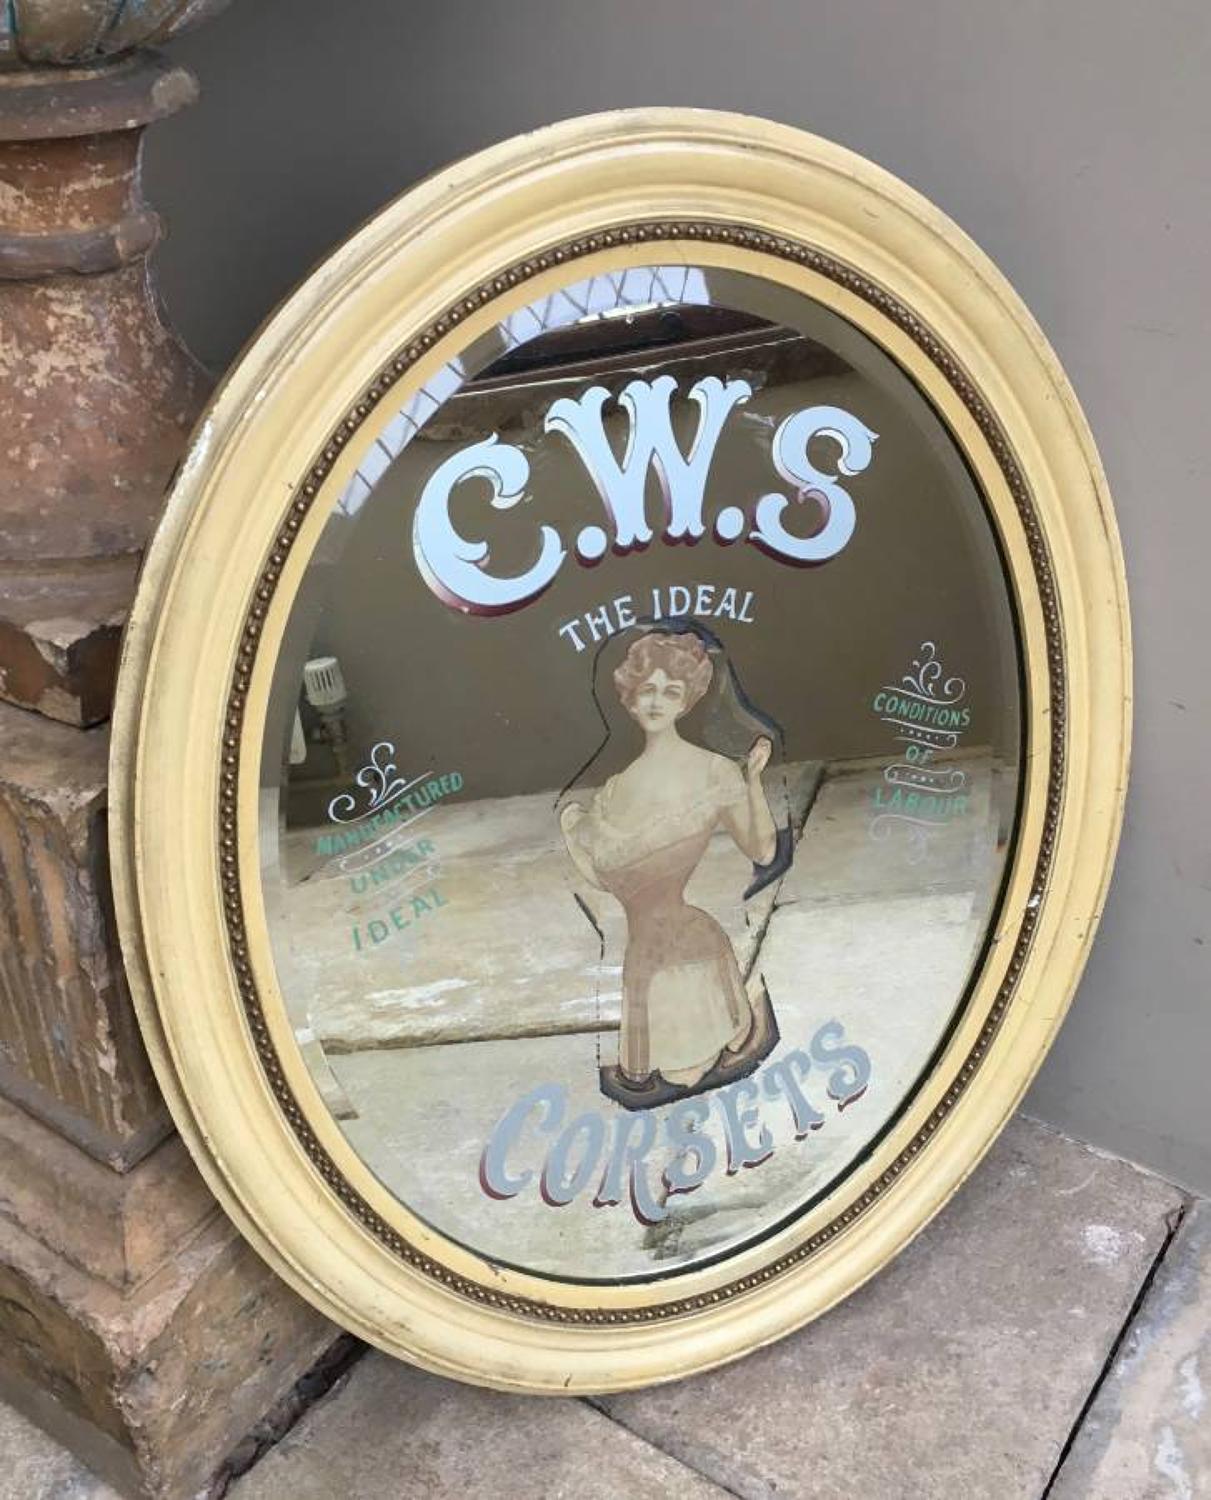 Edwardian Shops Advertising Mirror - CWS Corsets